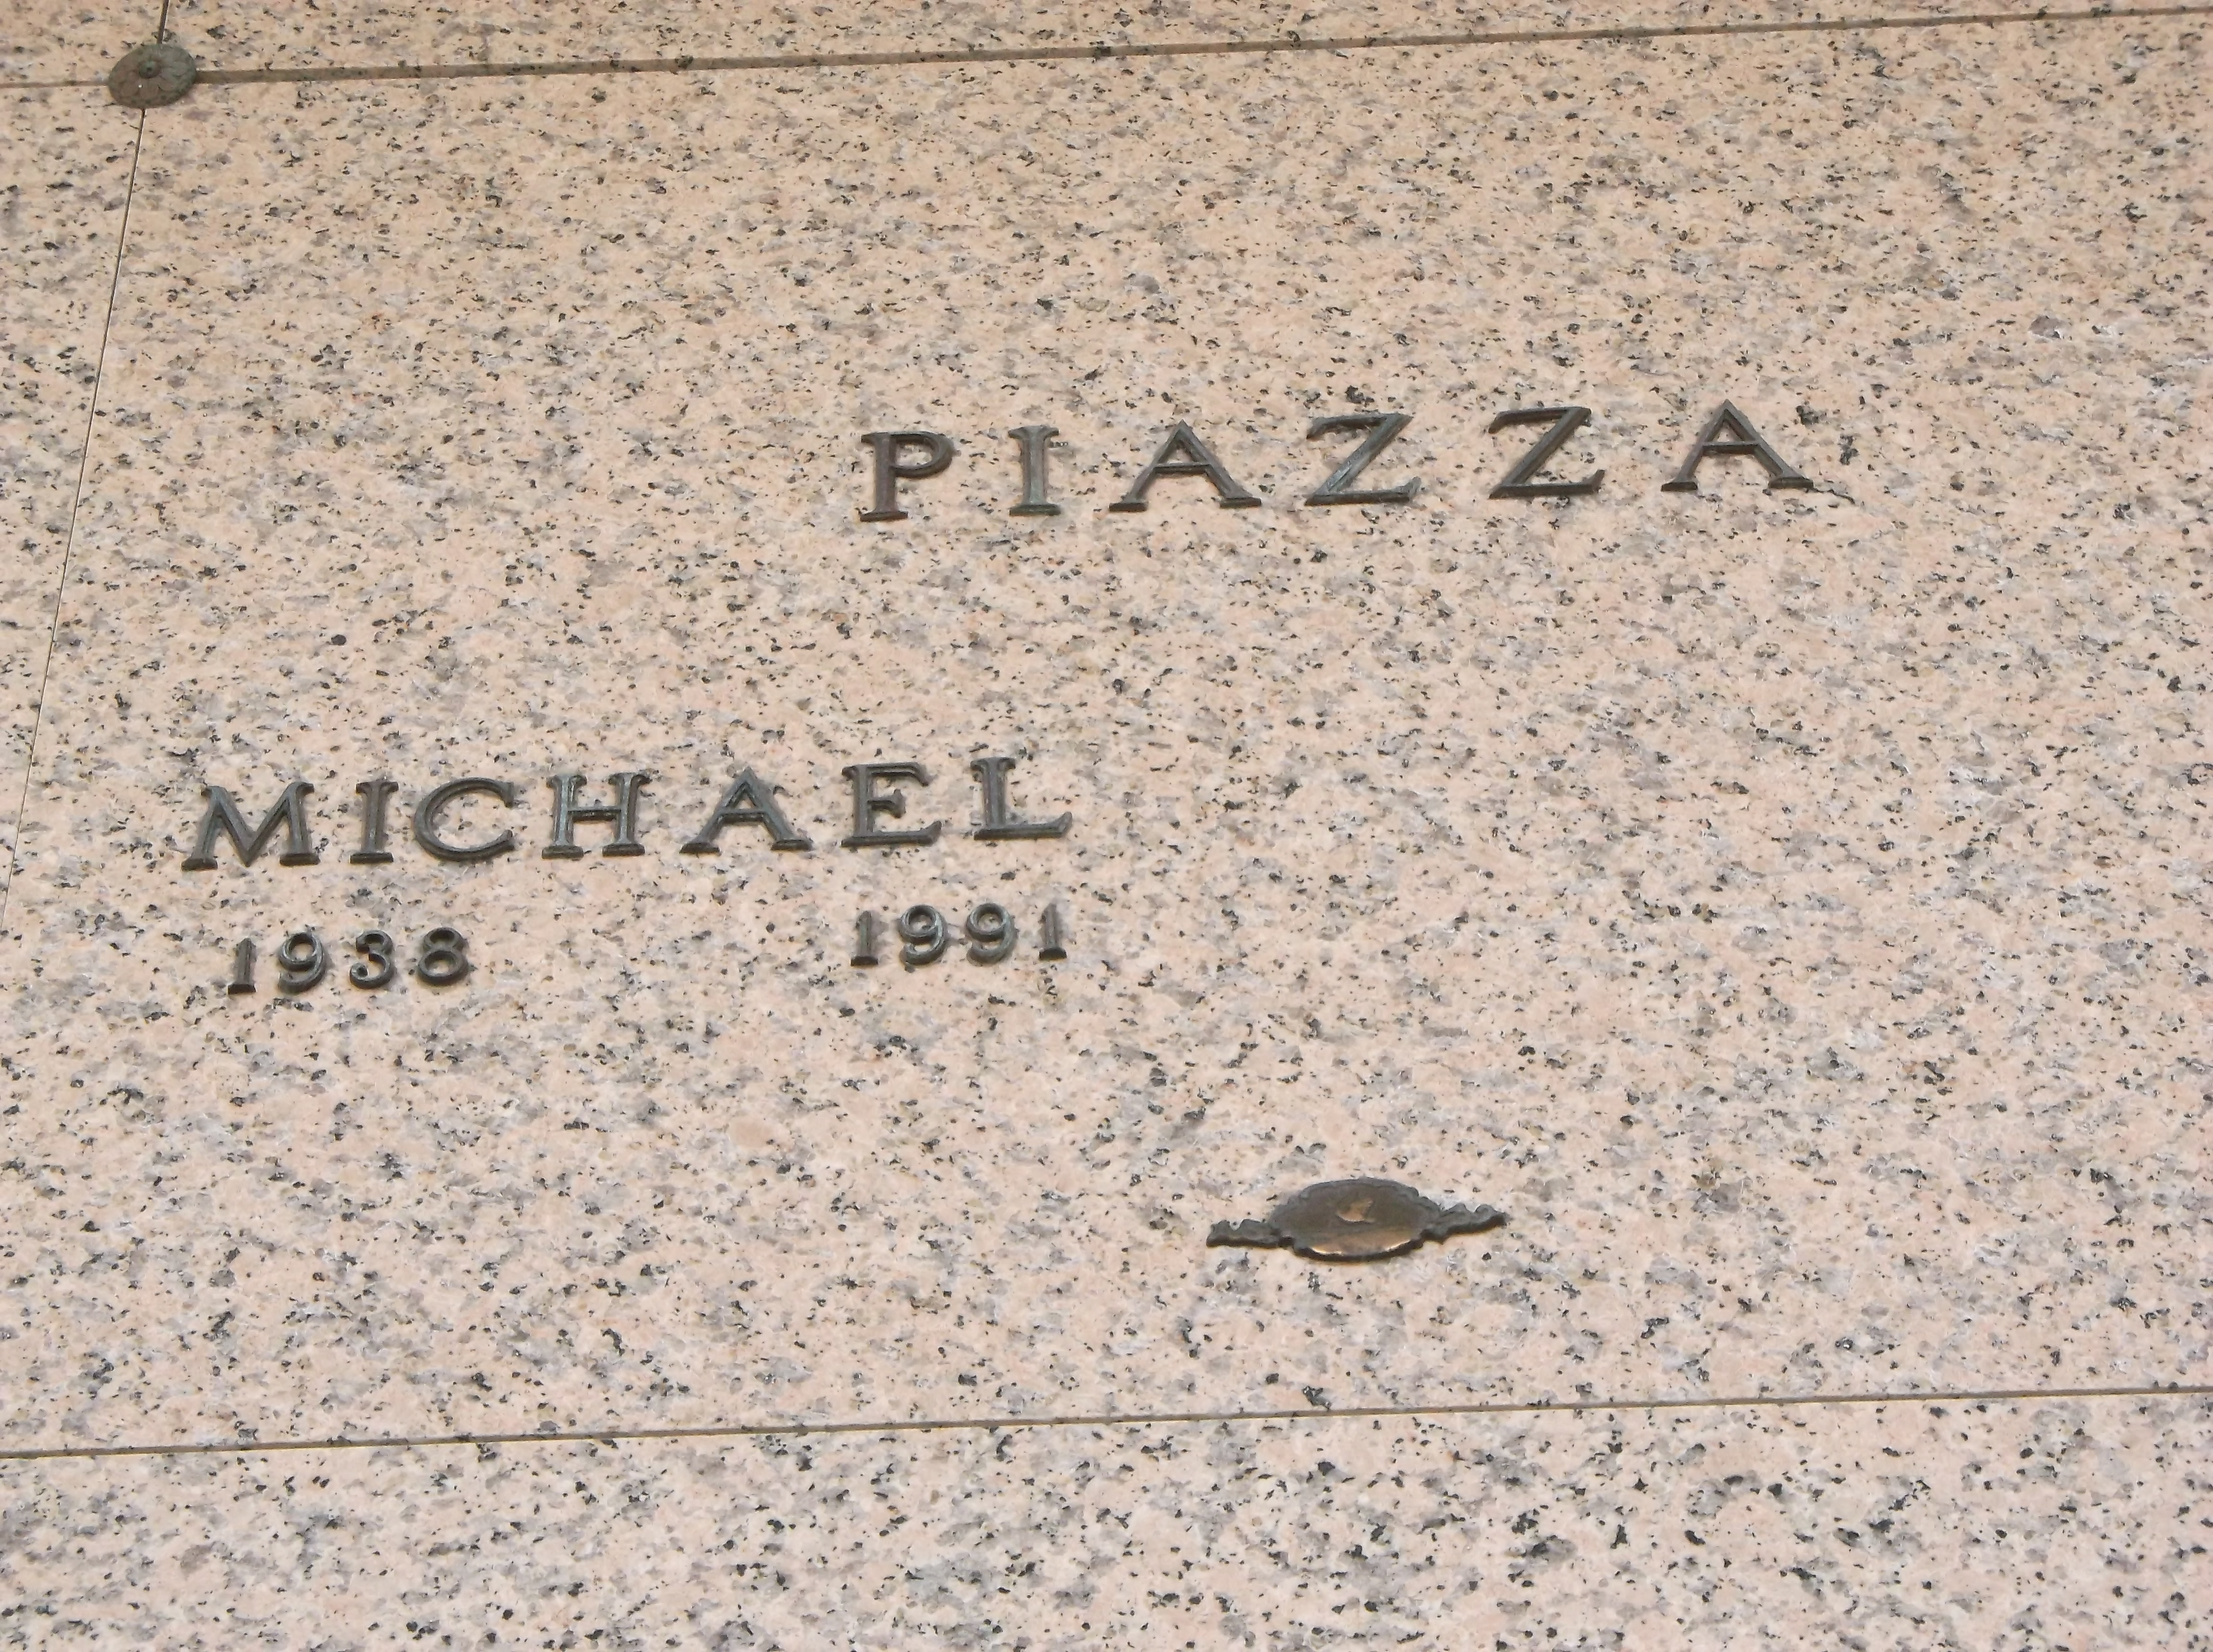 Michael Piazza